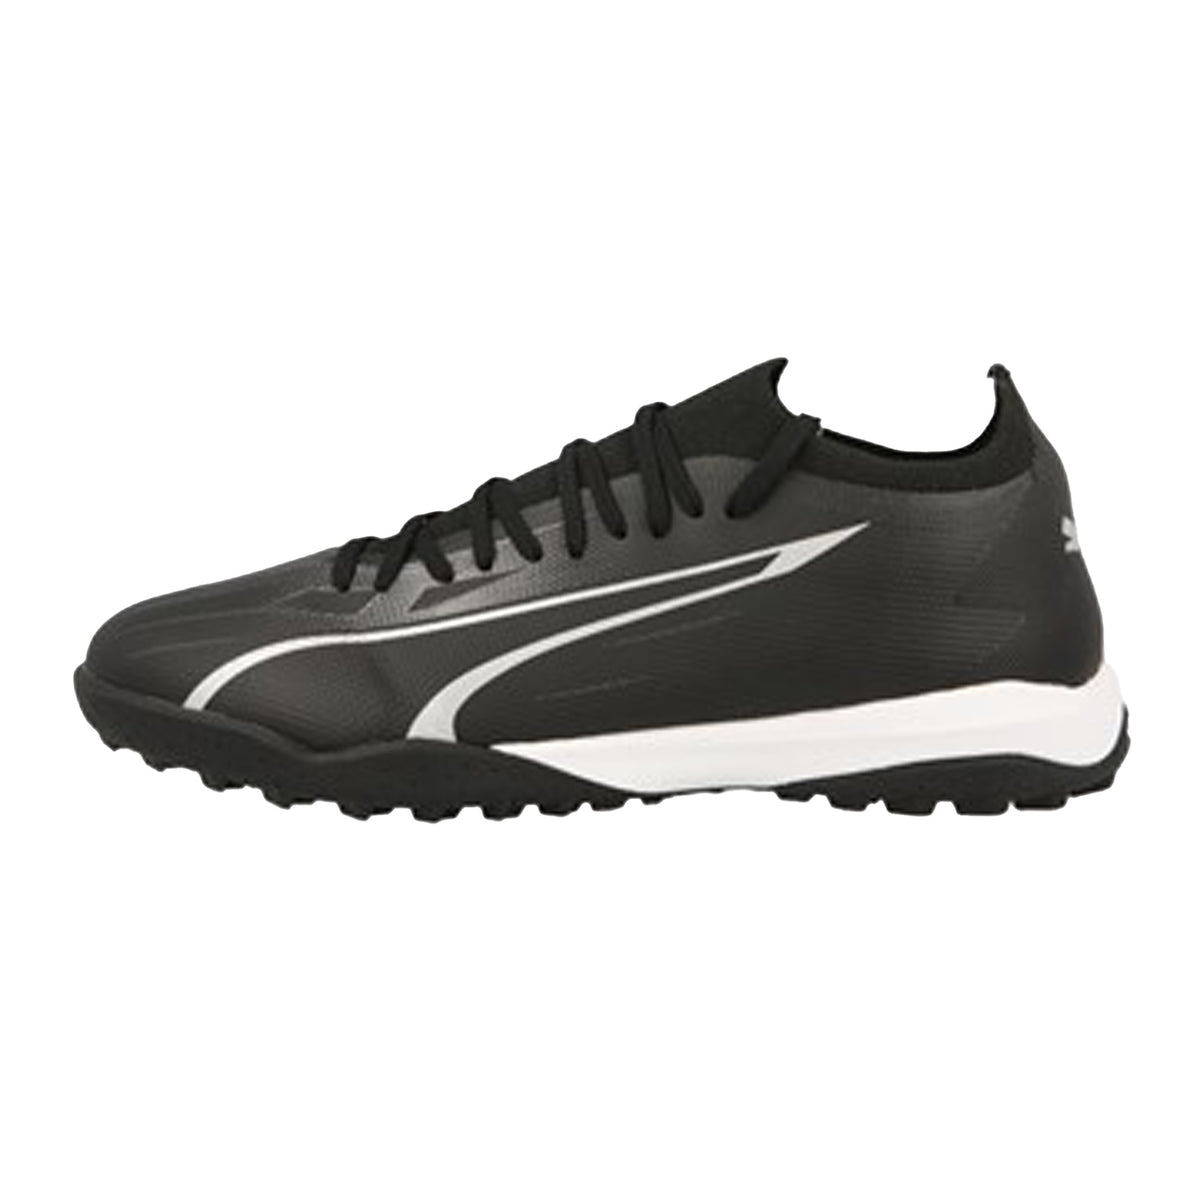 Puma Ultra Match Astro Football Boots: Black/Asphalt